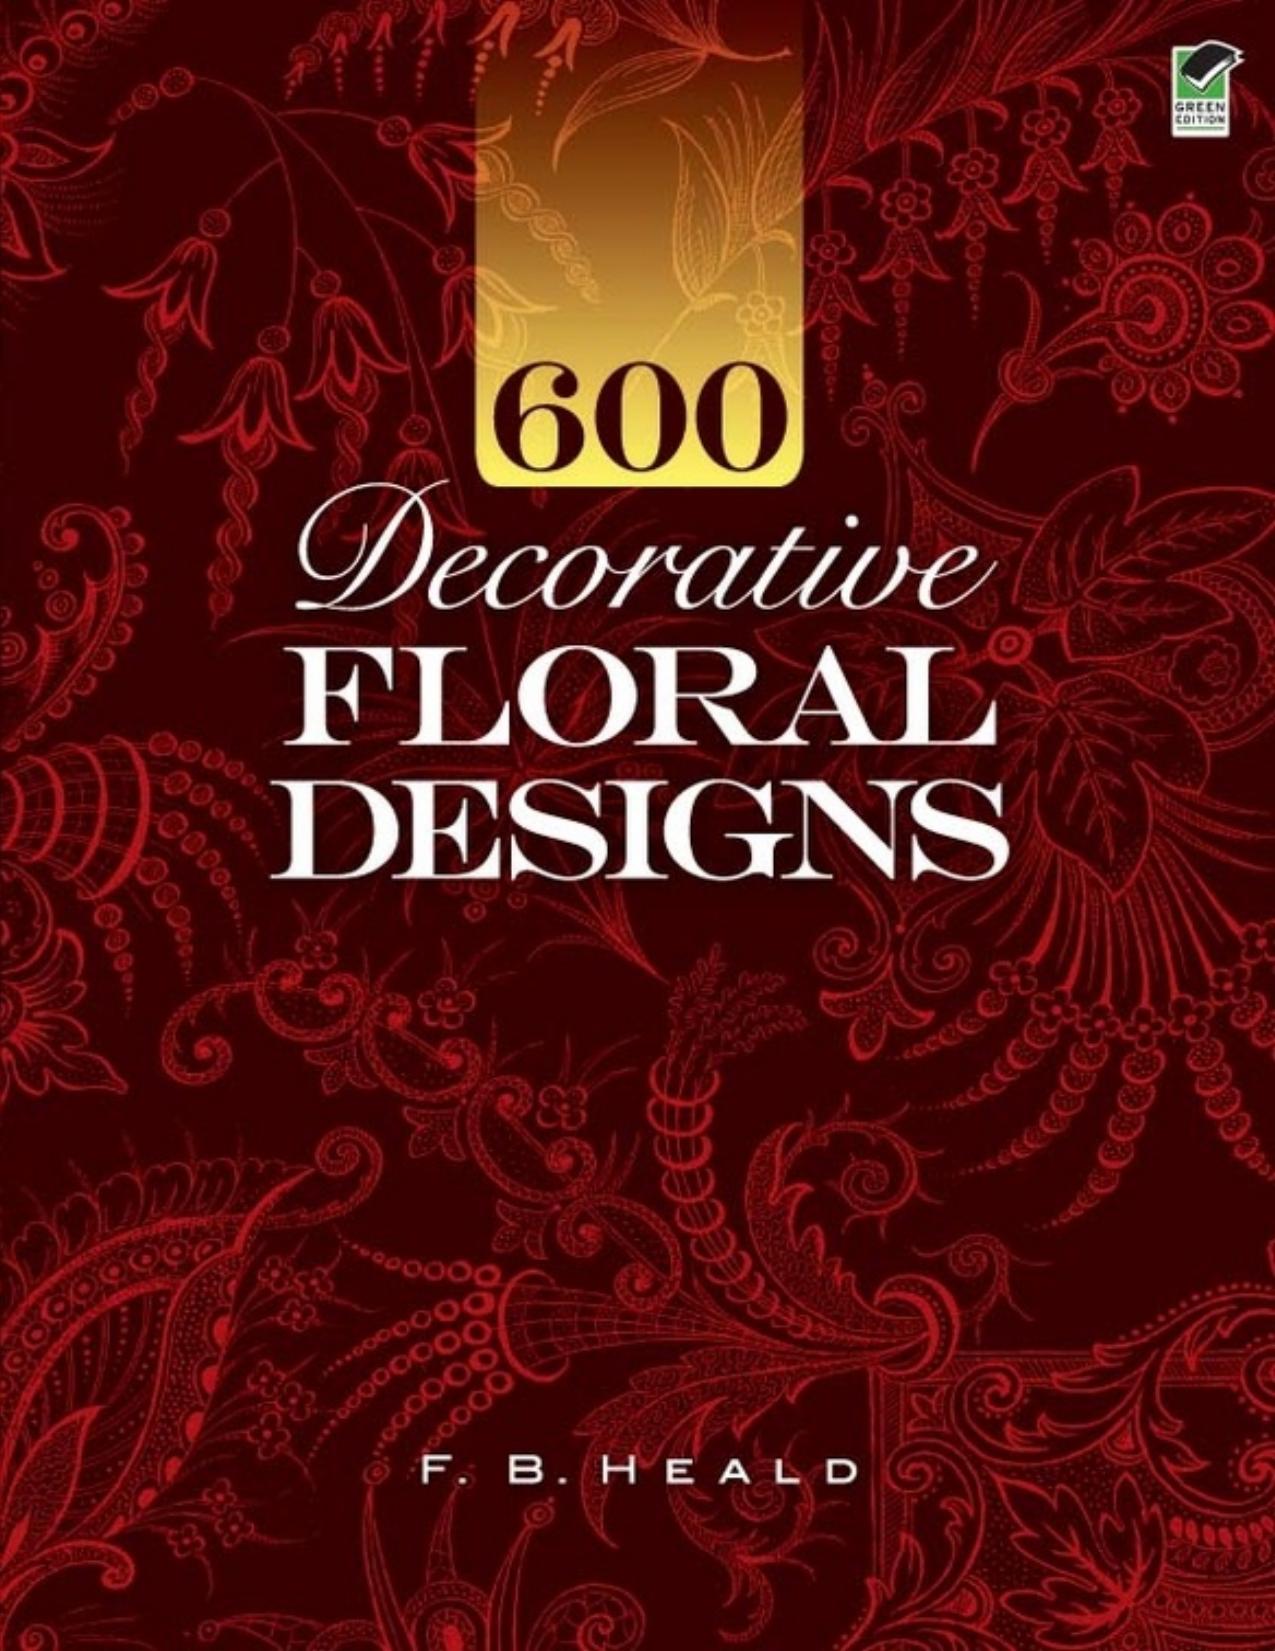 600 Decorative Floral Designs by F. B. Heald